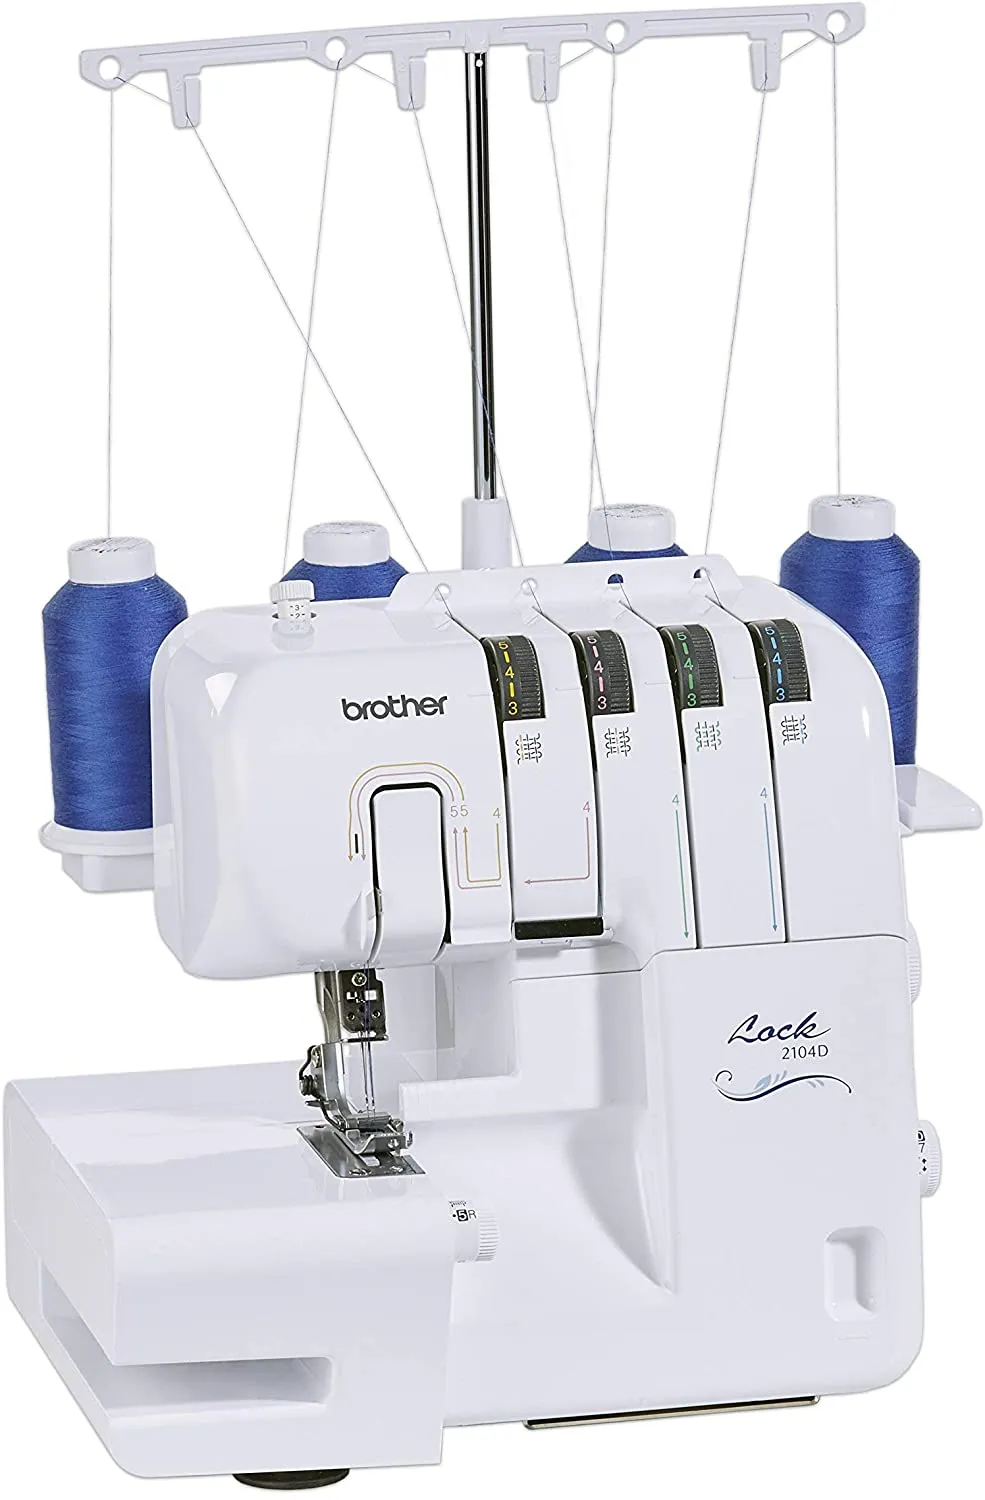 Brother 2104D Overlocker Sewing machine